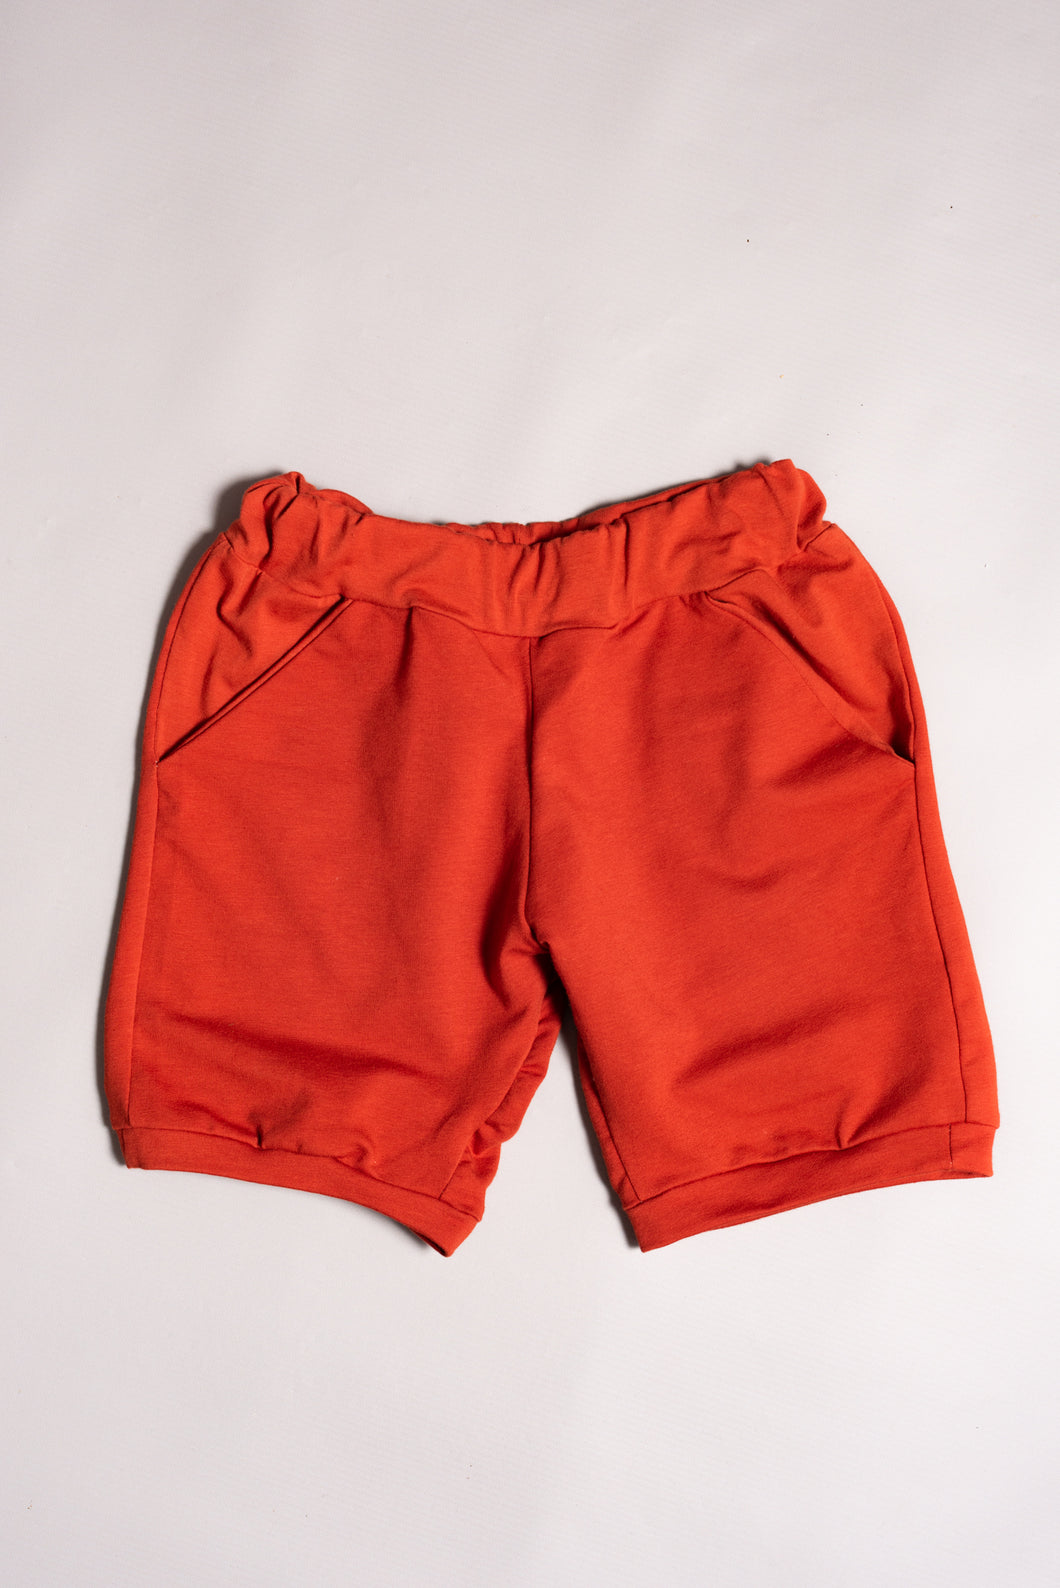 Kids Shorts